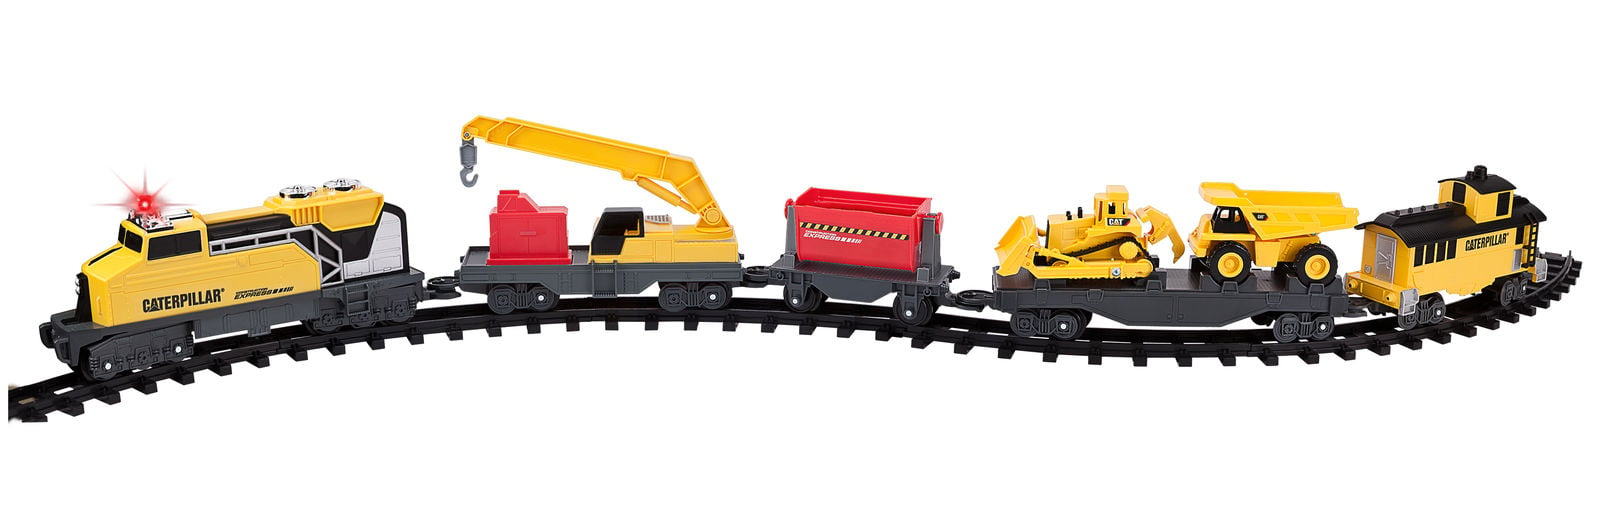 cat motorized construction express train